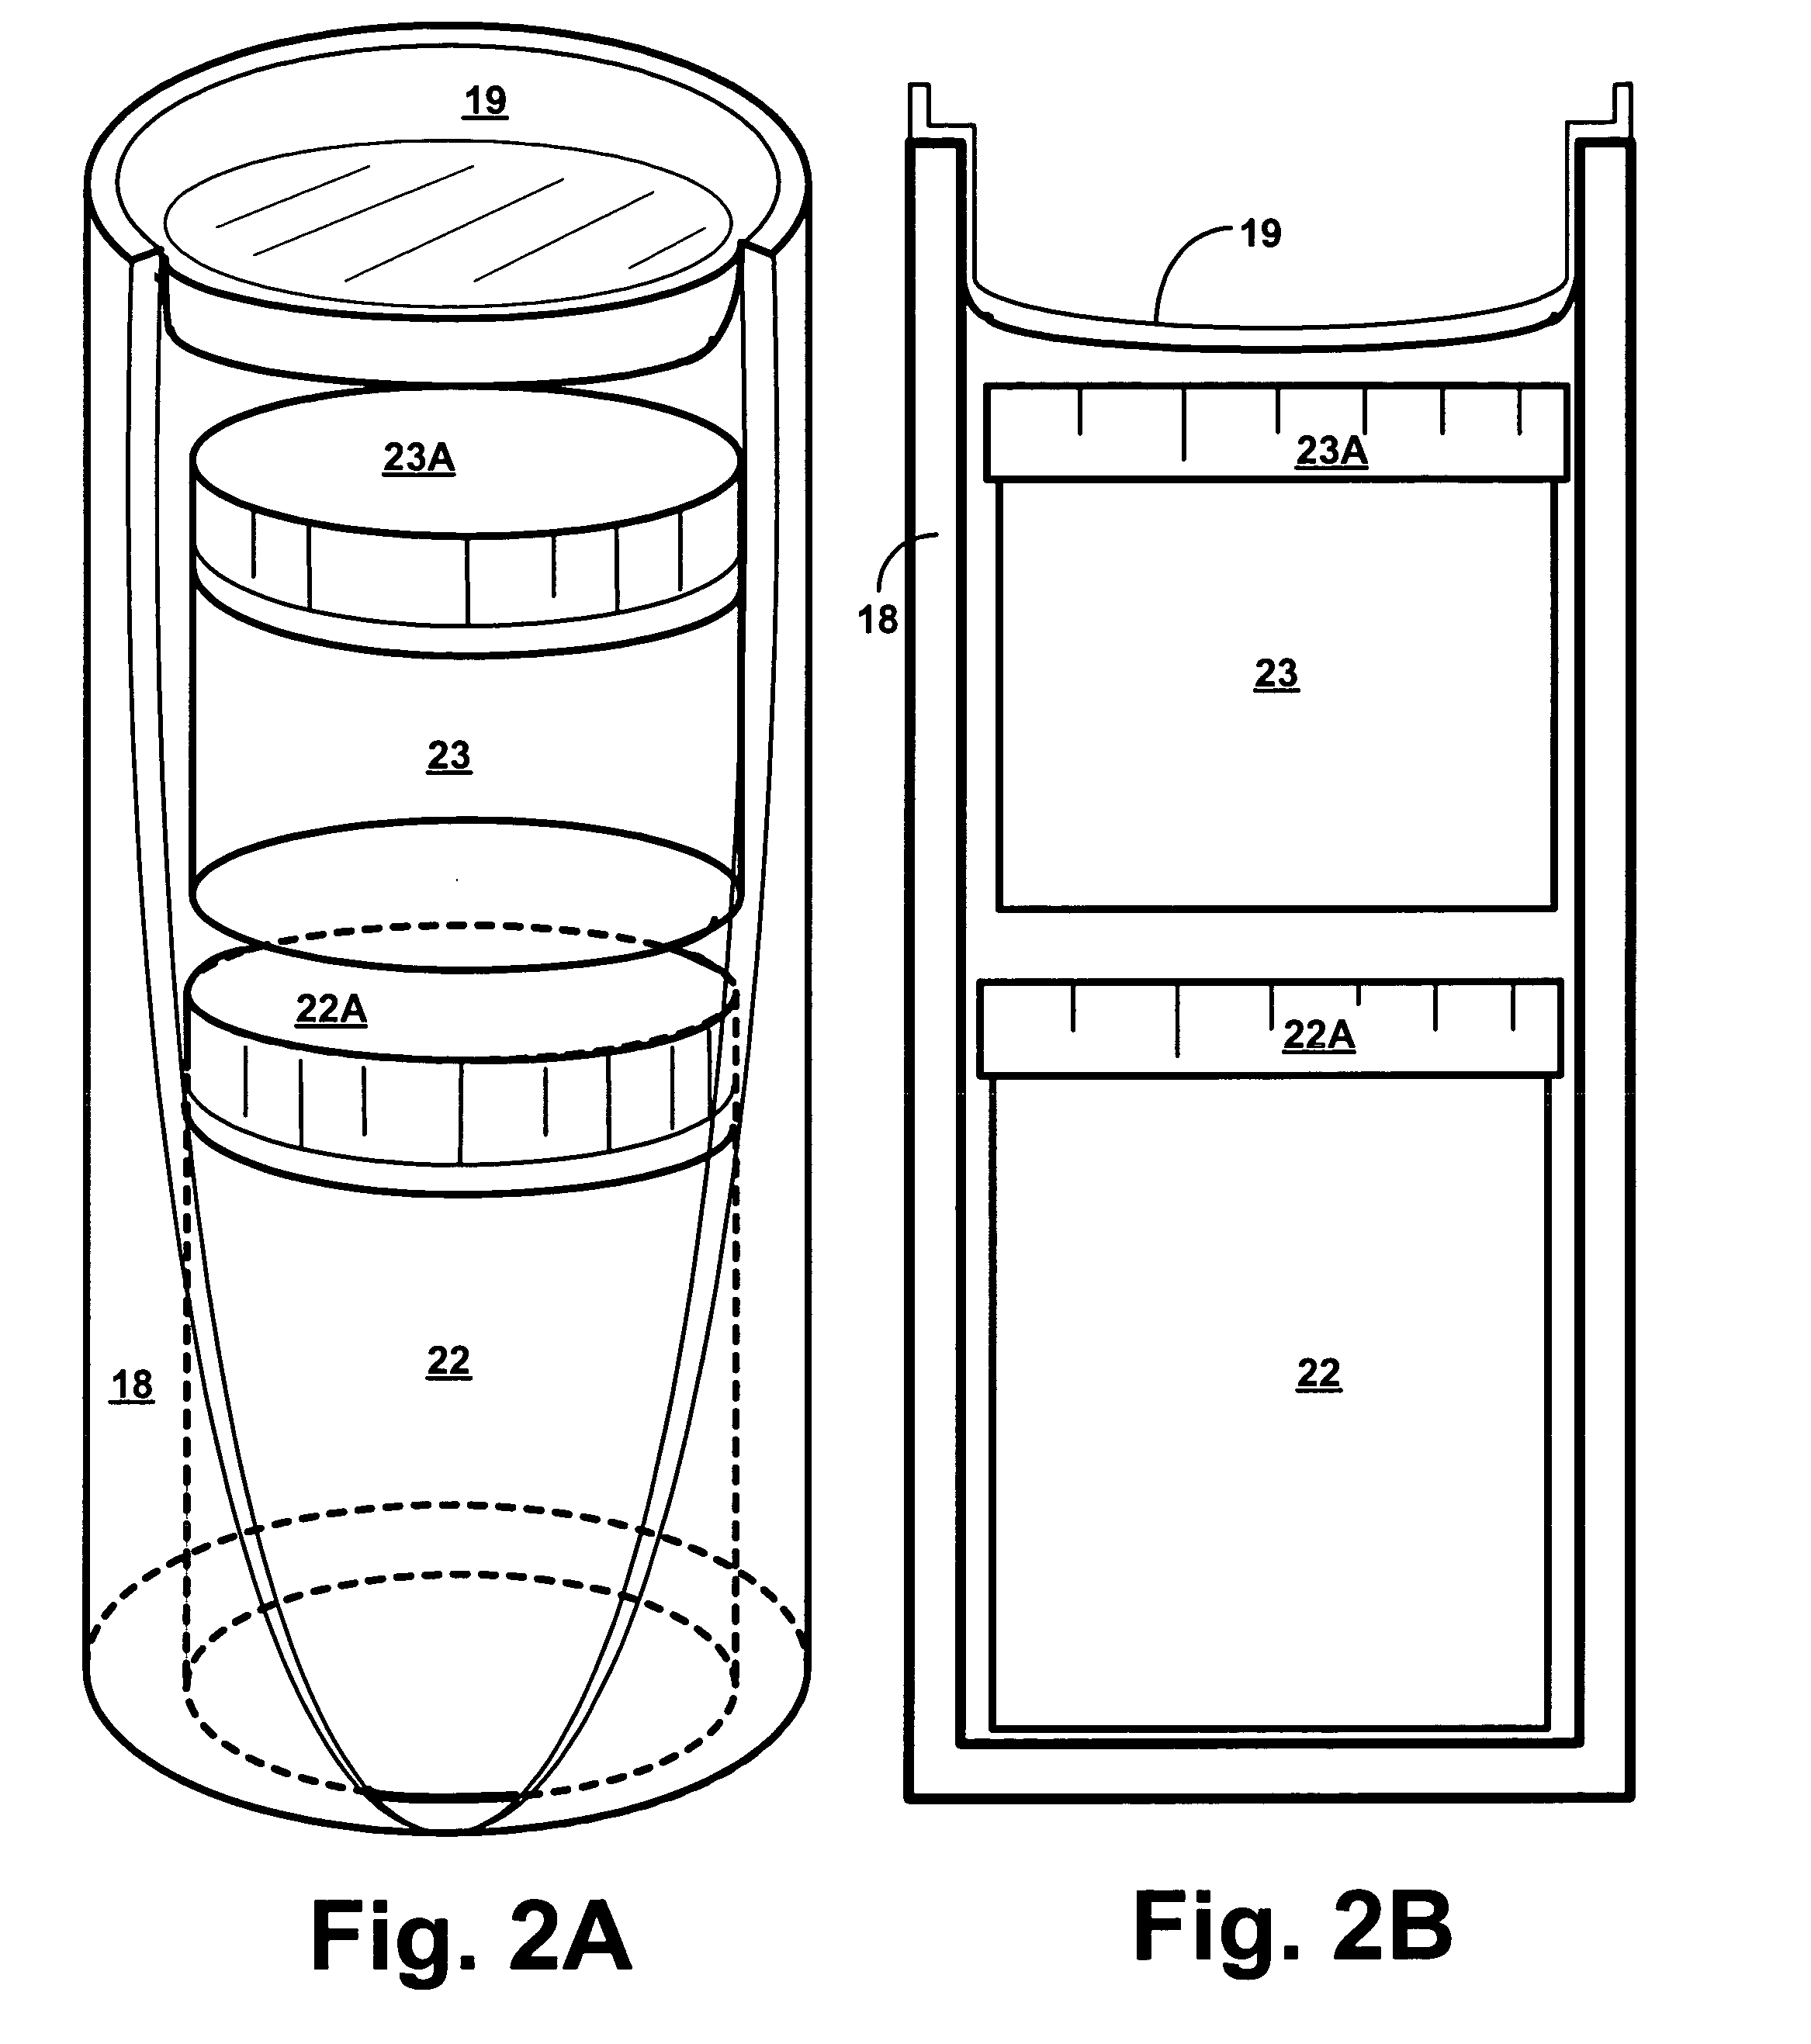 Apparatus and methods of burial using a columbarium pod